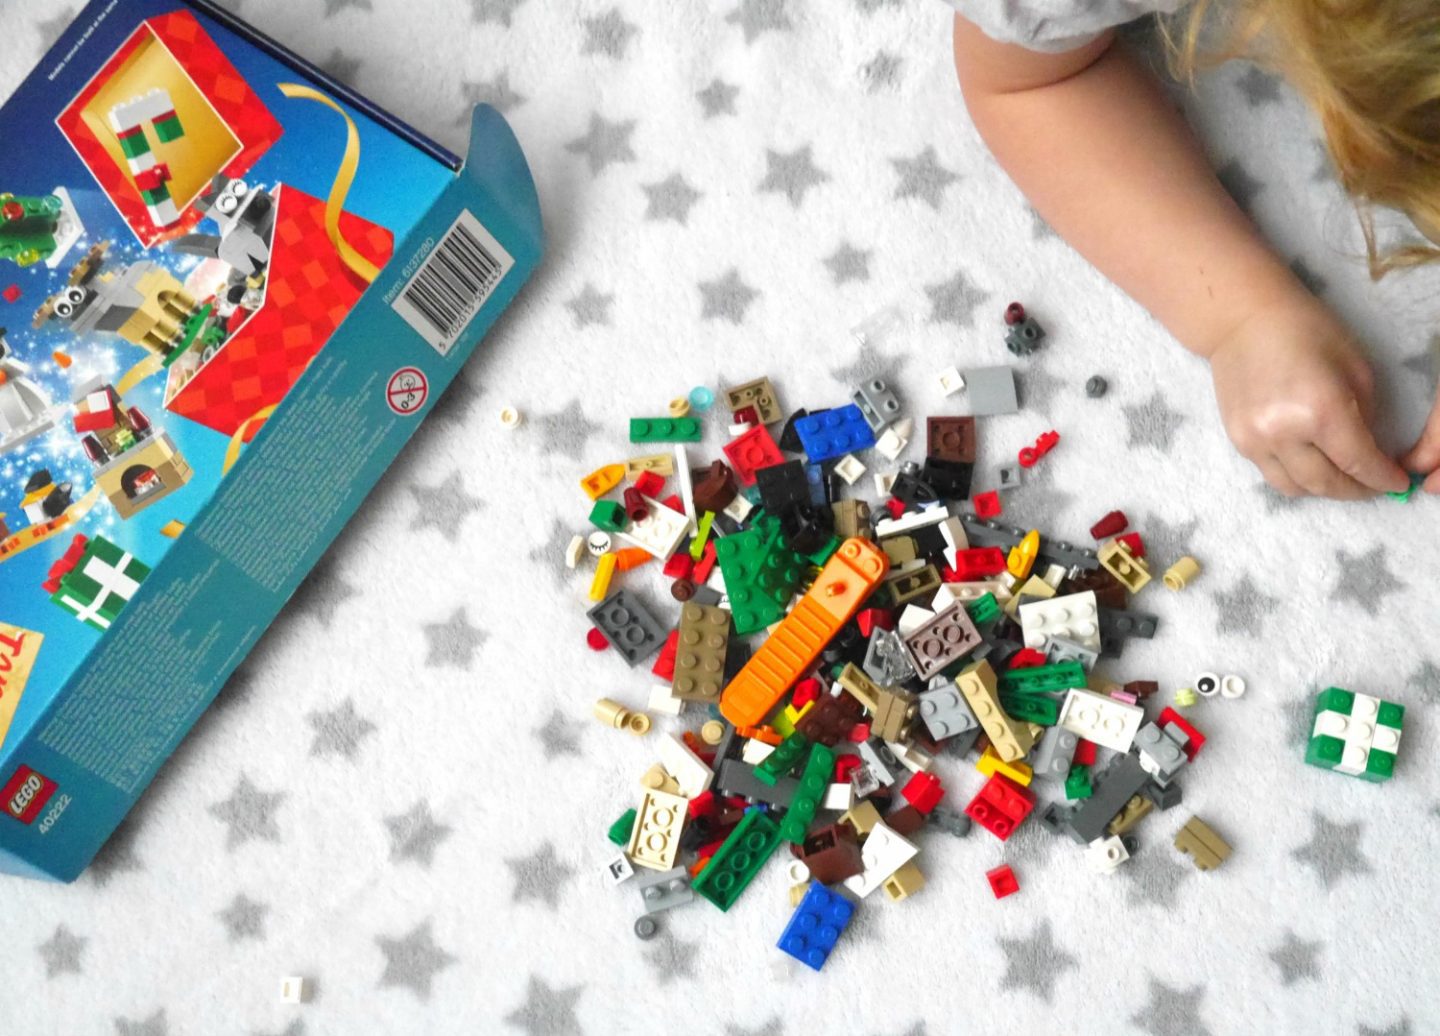 Lego Christmas sets - Lego Build to Give